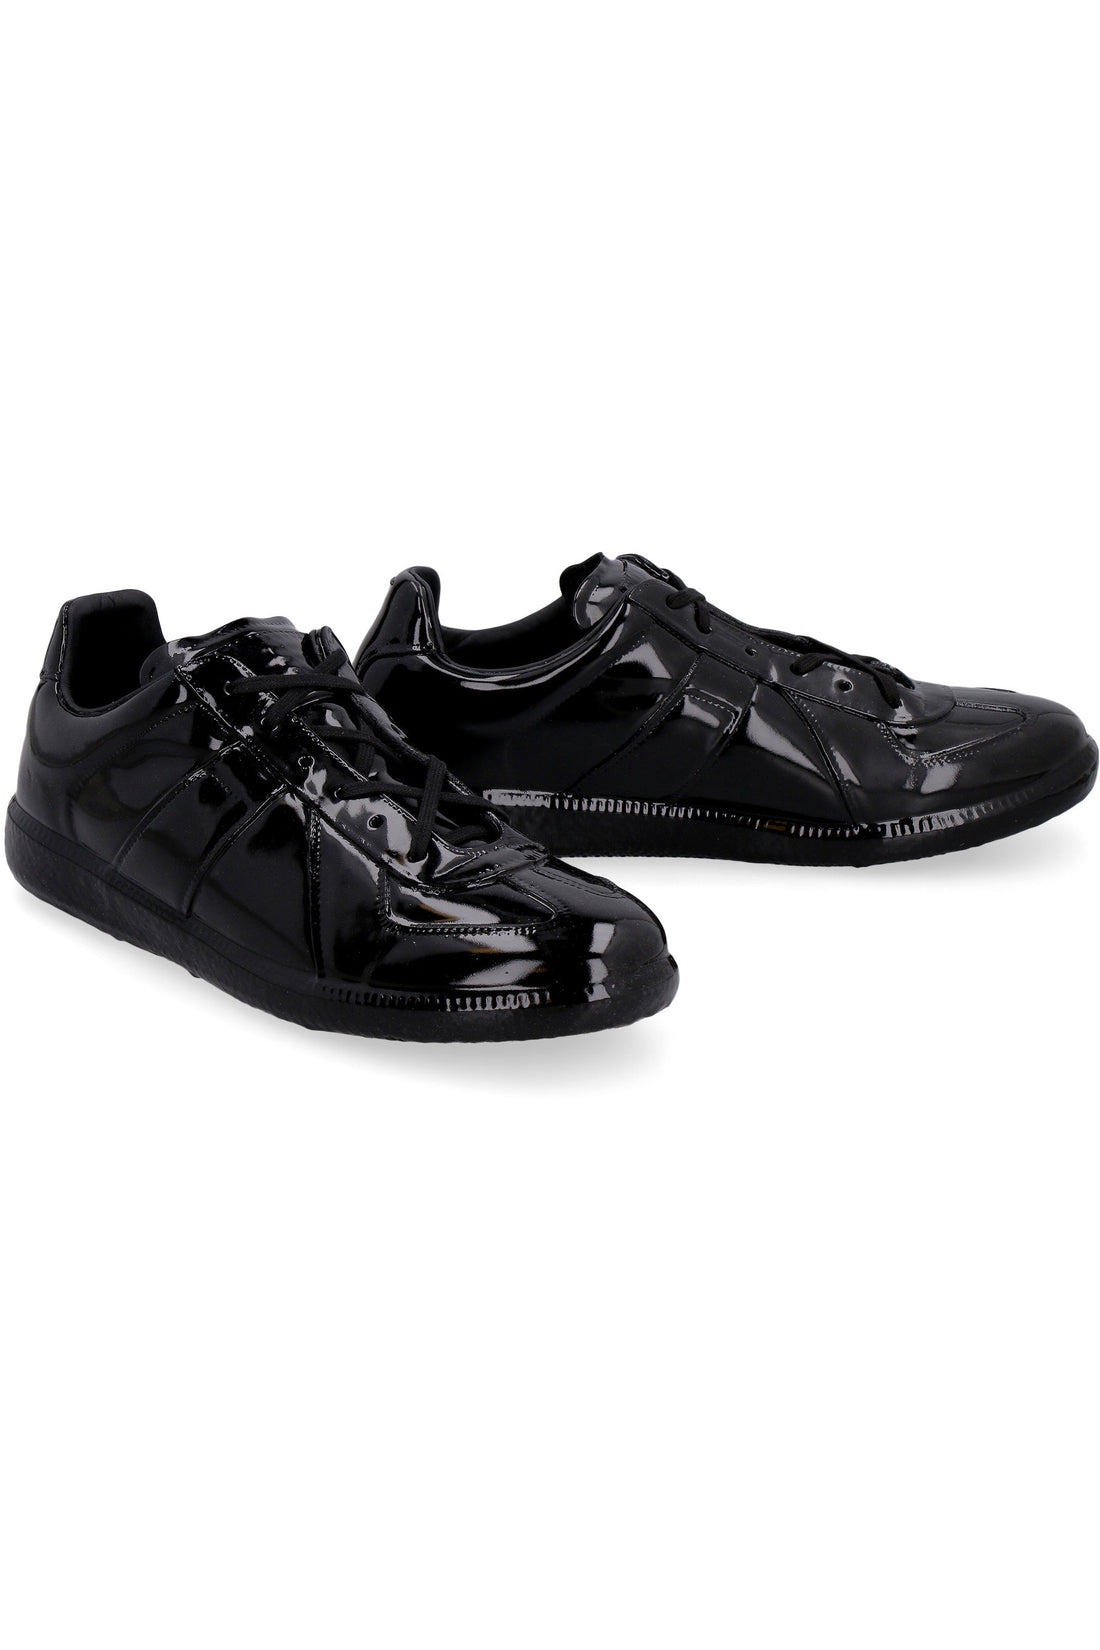 Maison Margiela-OUTLET-SALE-Replica patent leather sneakers-ARCHIVIST